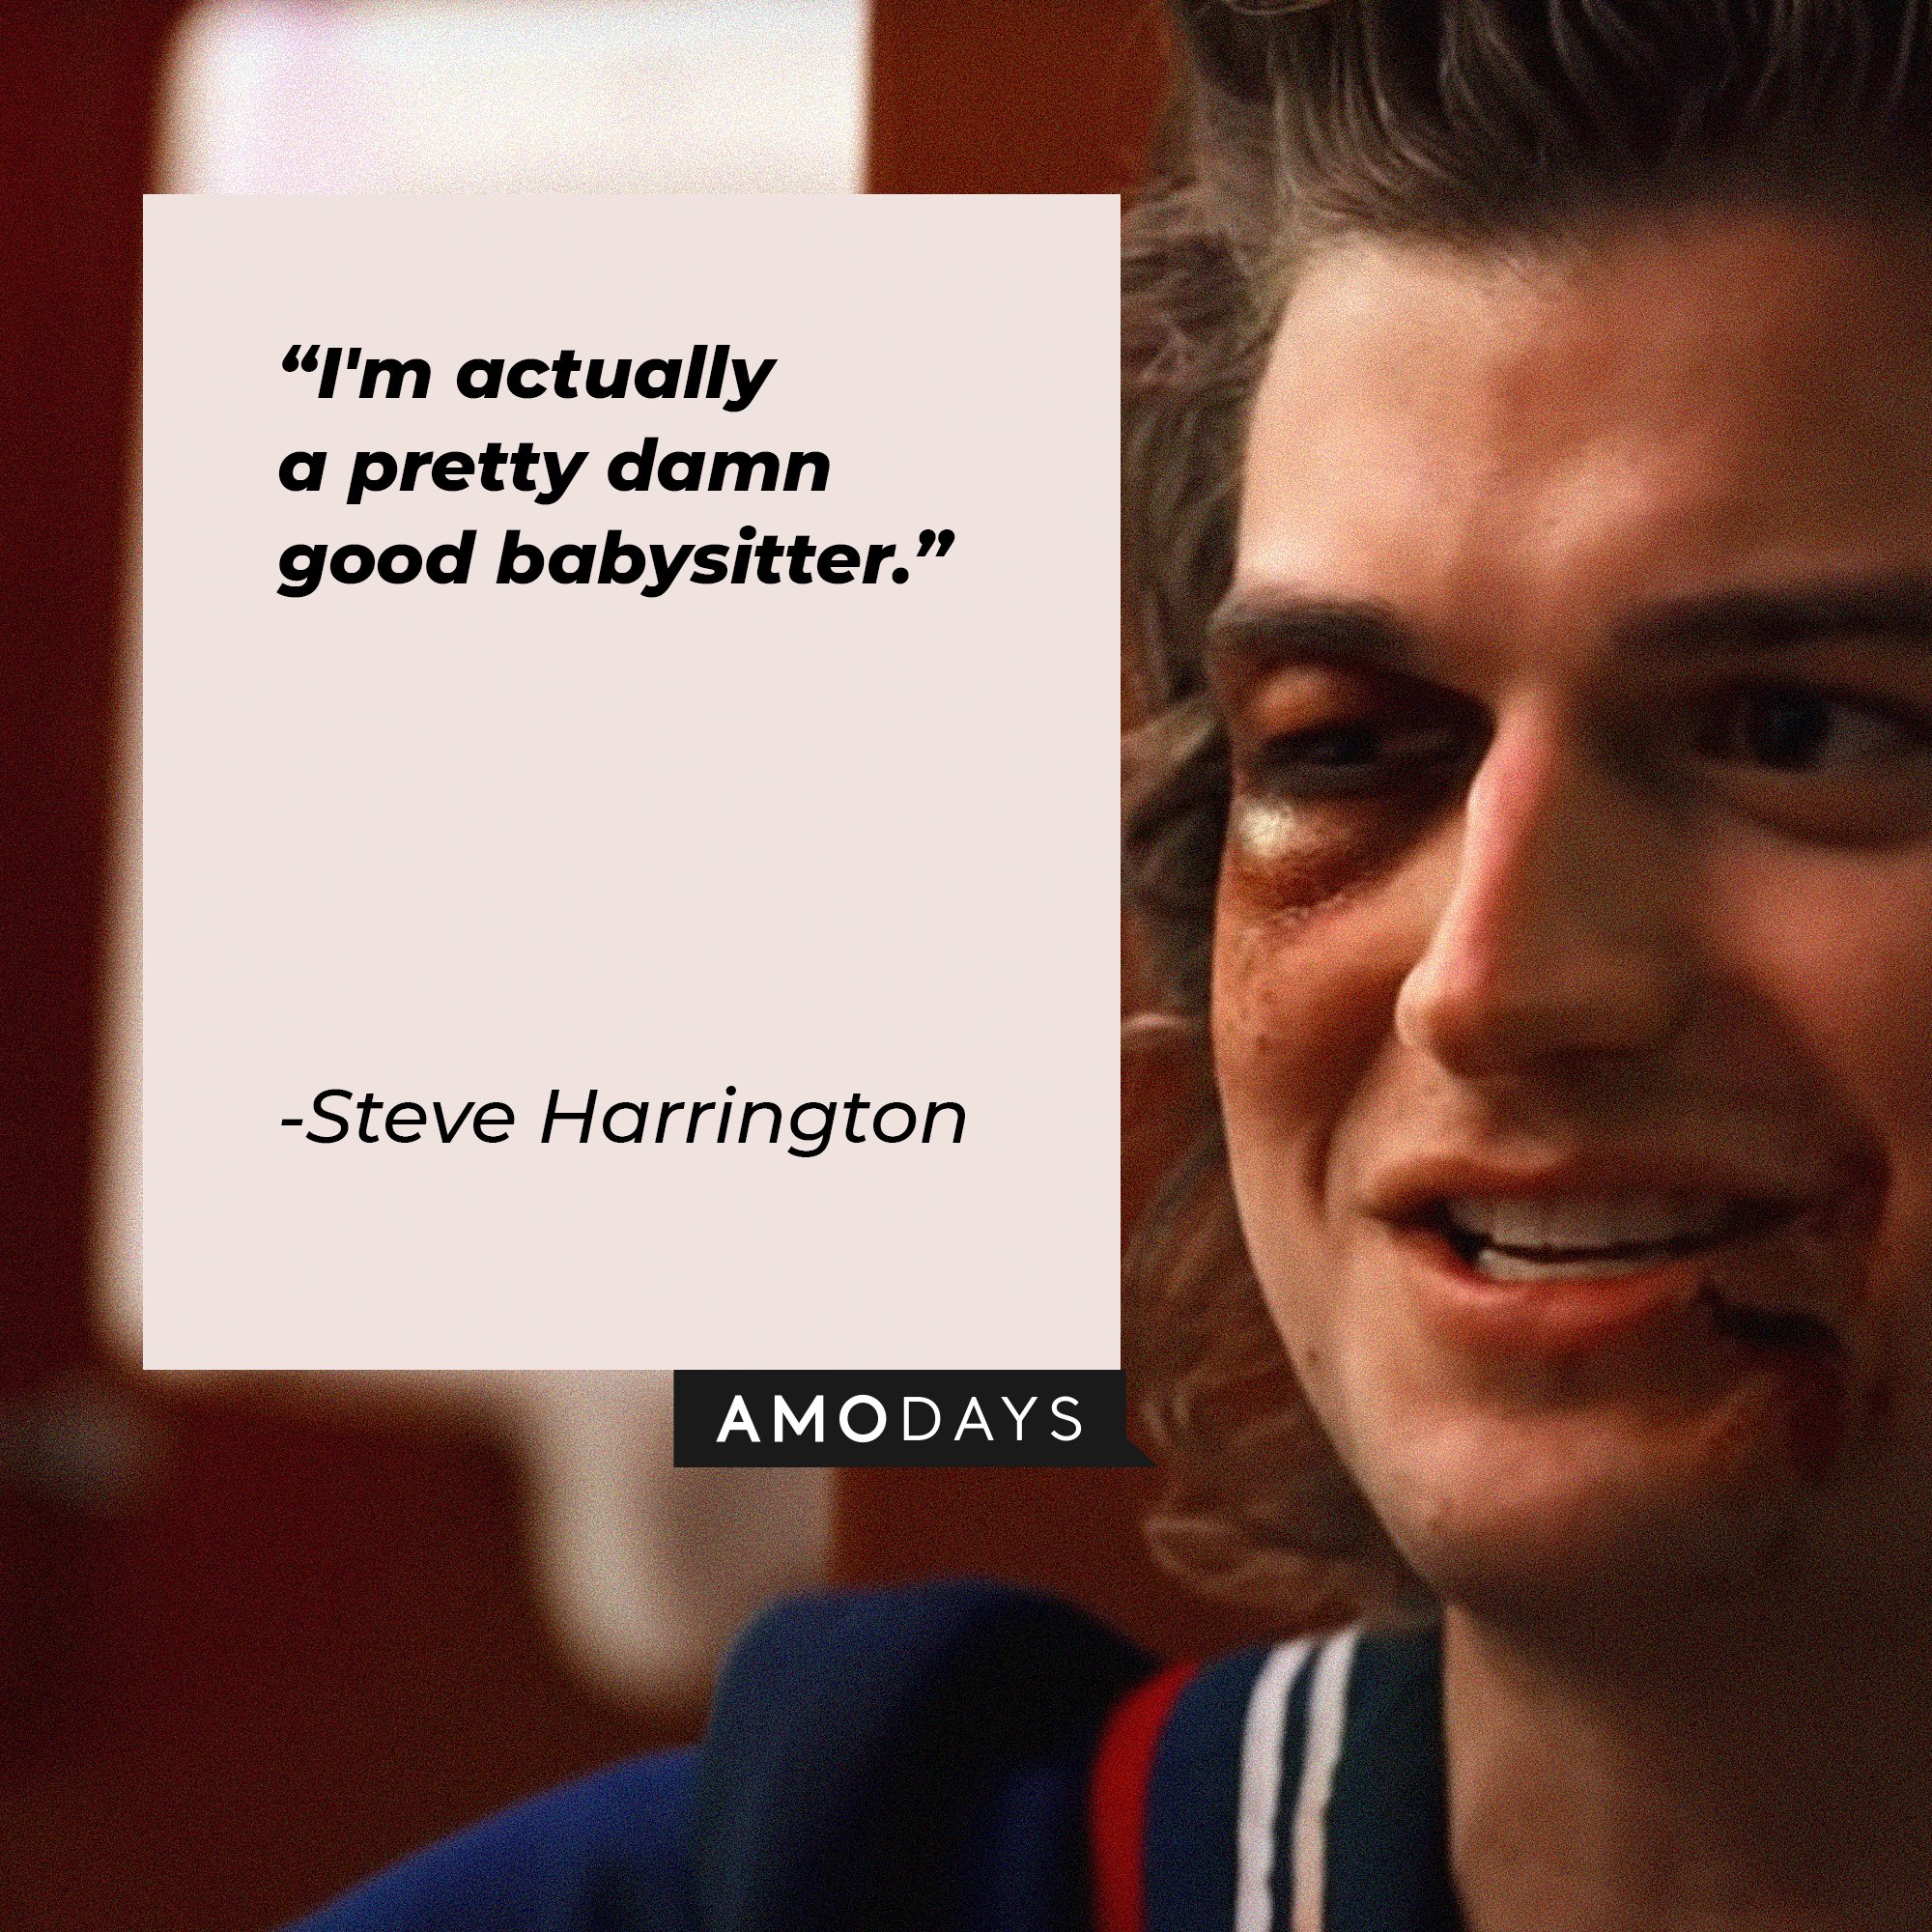  Steve Harrington's quote: “I'm actually a pretty damn good babysitter.” | Image: AmoDays  